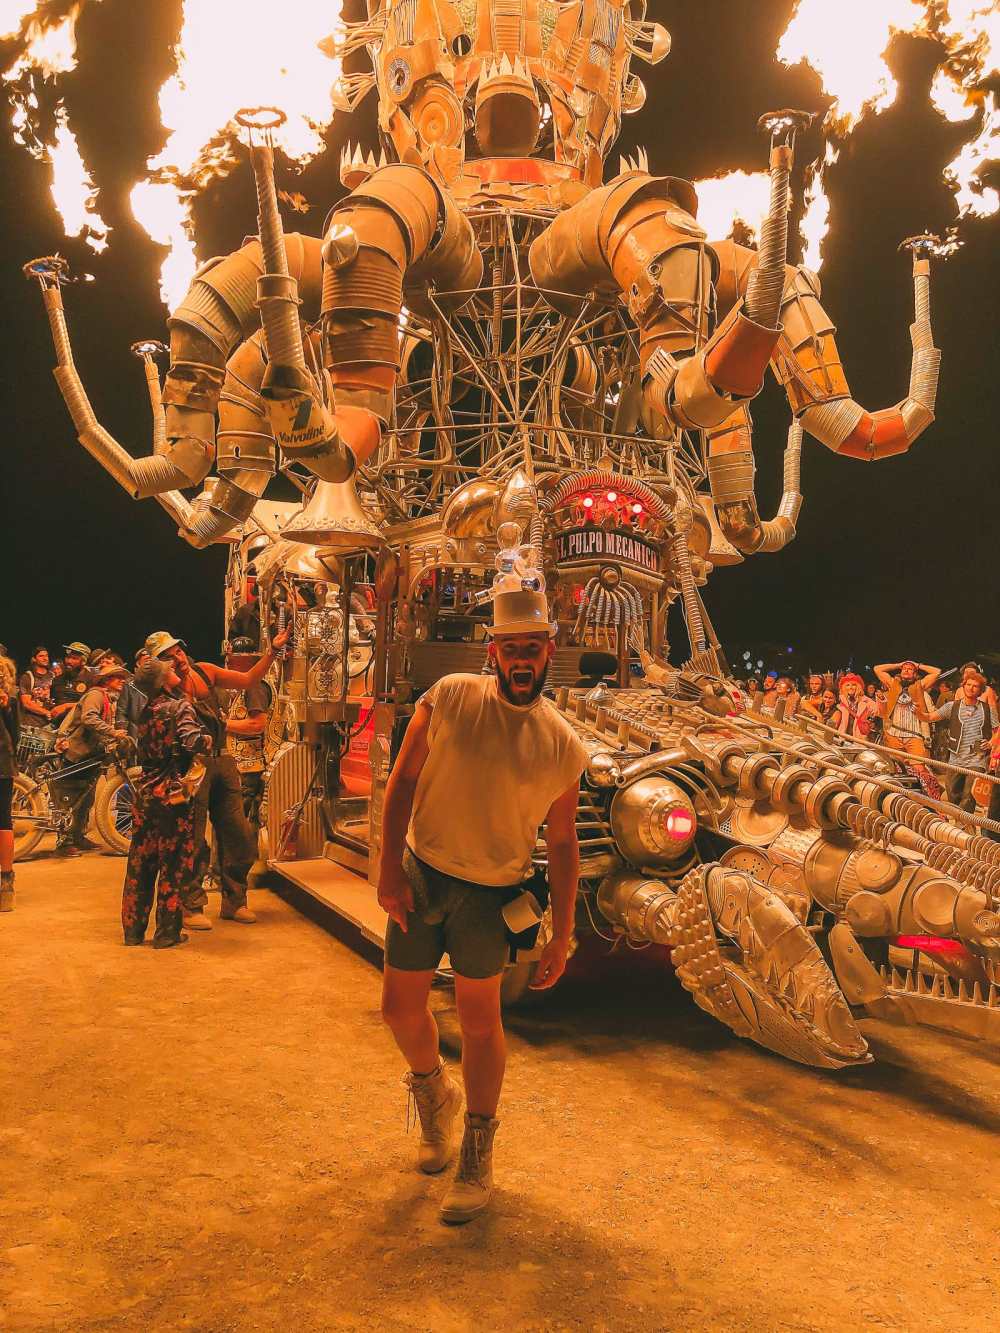  Руководство для новичков по Burning Man (35) 